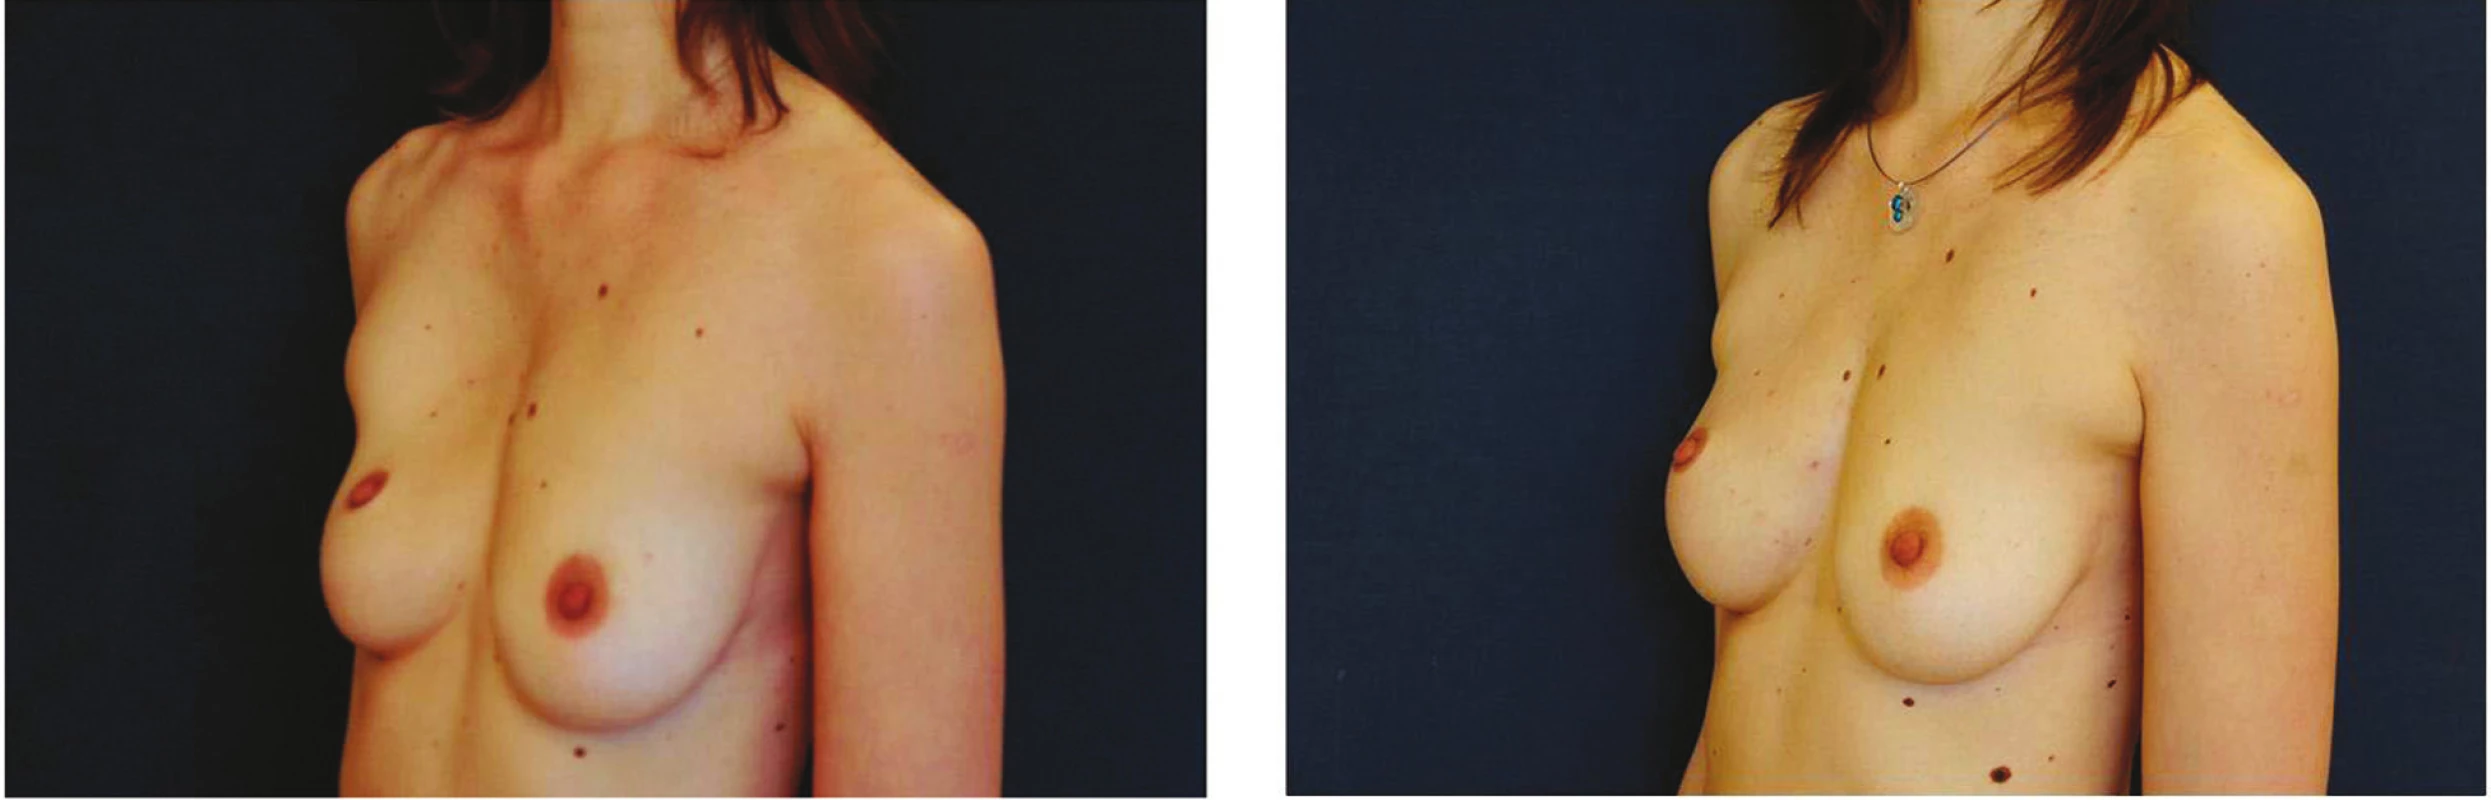 Pacientka s deformitou hrudního koše; před a 3 měsíce po korekci fatgraftingem
Fig. 4: Patient with chest deformity before and three months after reconstruction using fat graft